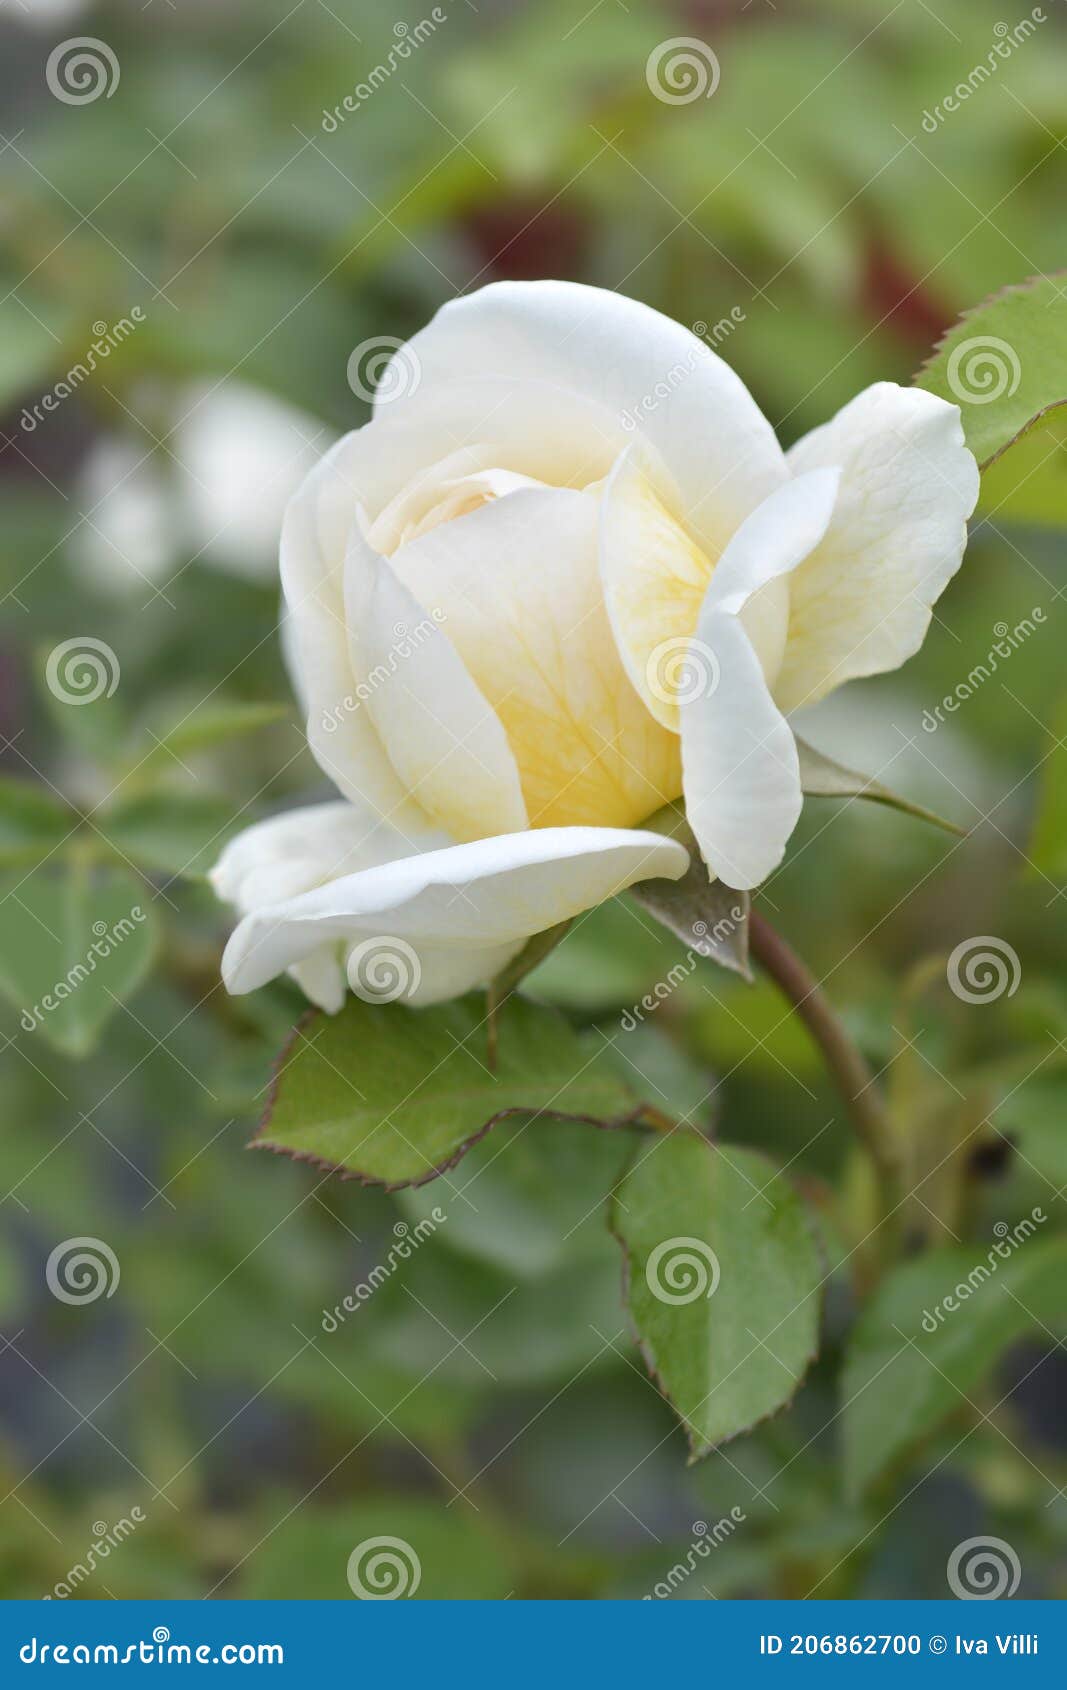 lady romantica rose